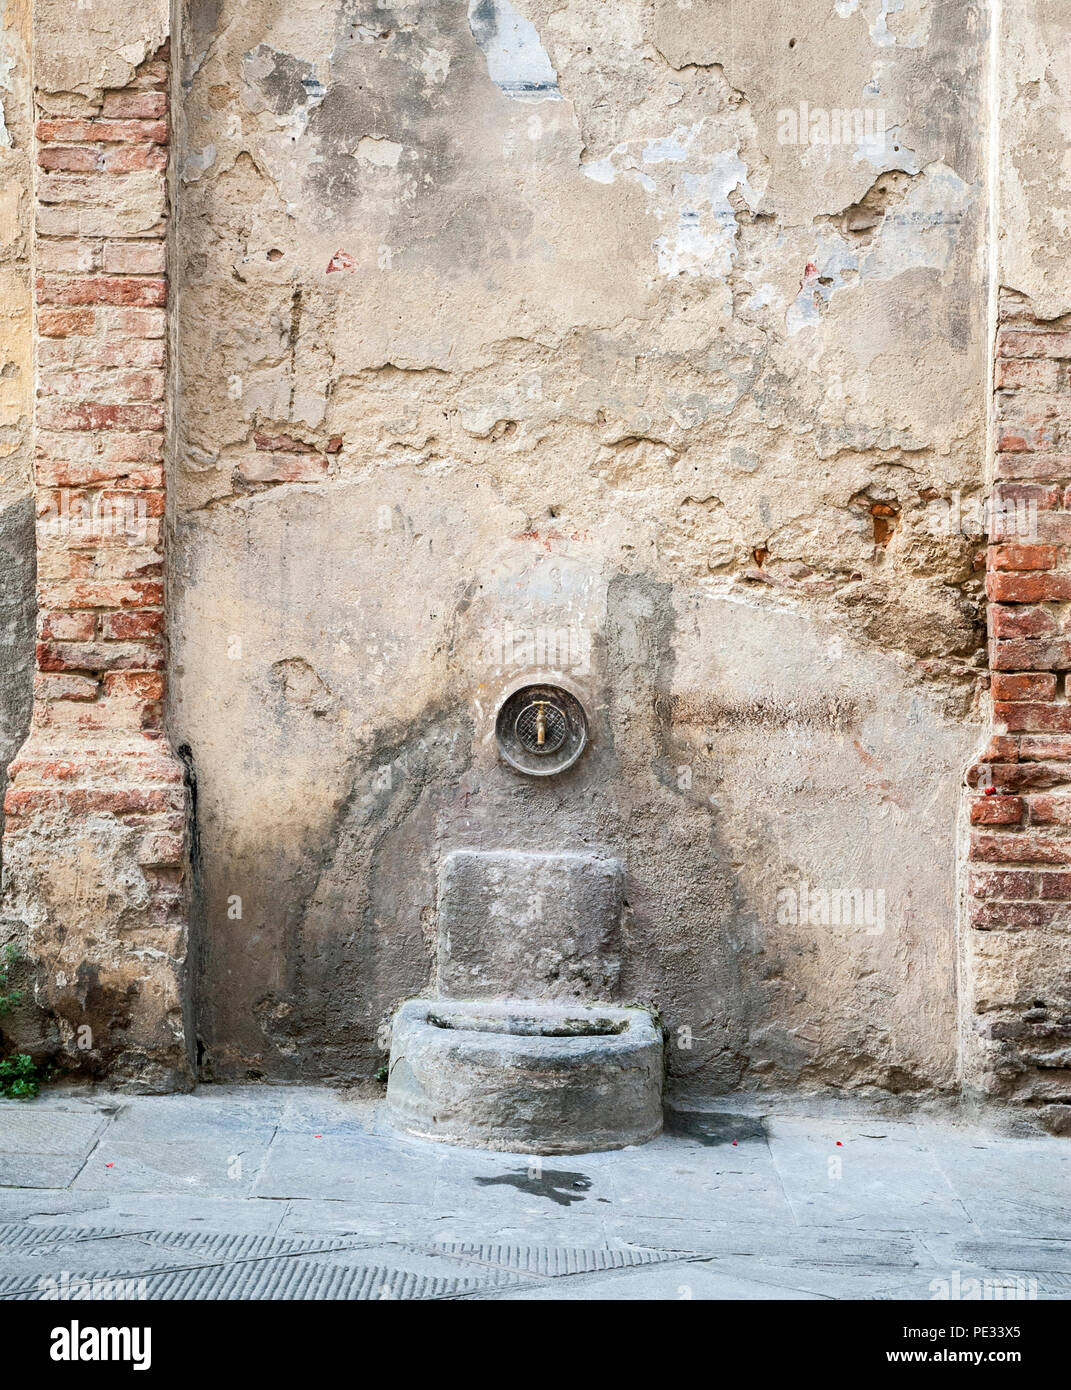 Fontaine de jardin Toscane : Robinet offert